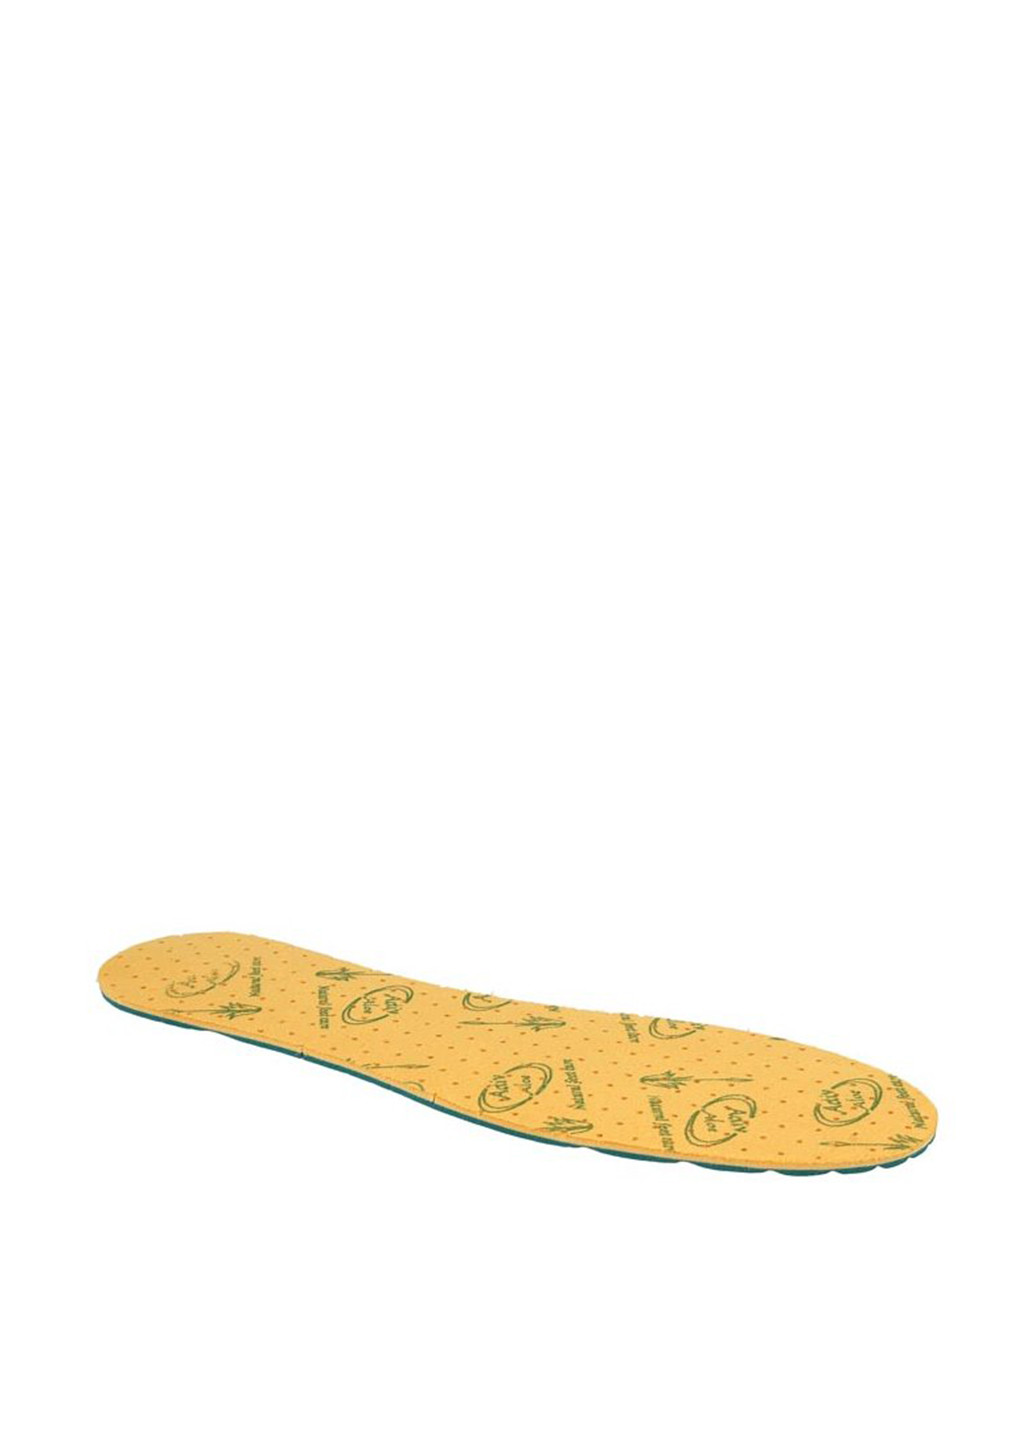 Устілки для взуття ALOE VERA NR 39-40/NG Coccine рисунки жёлтые